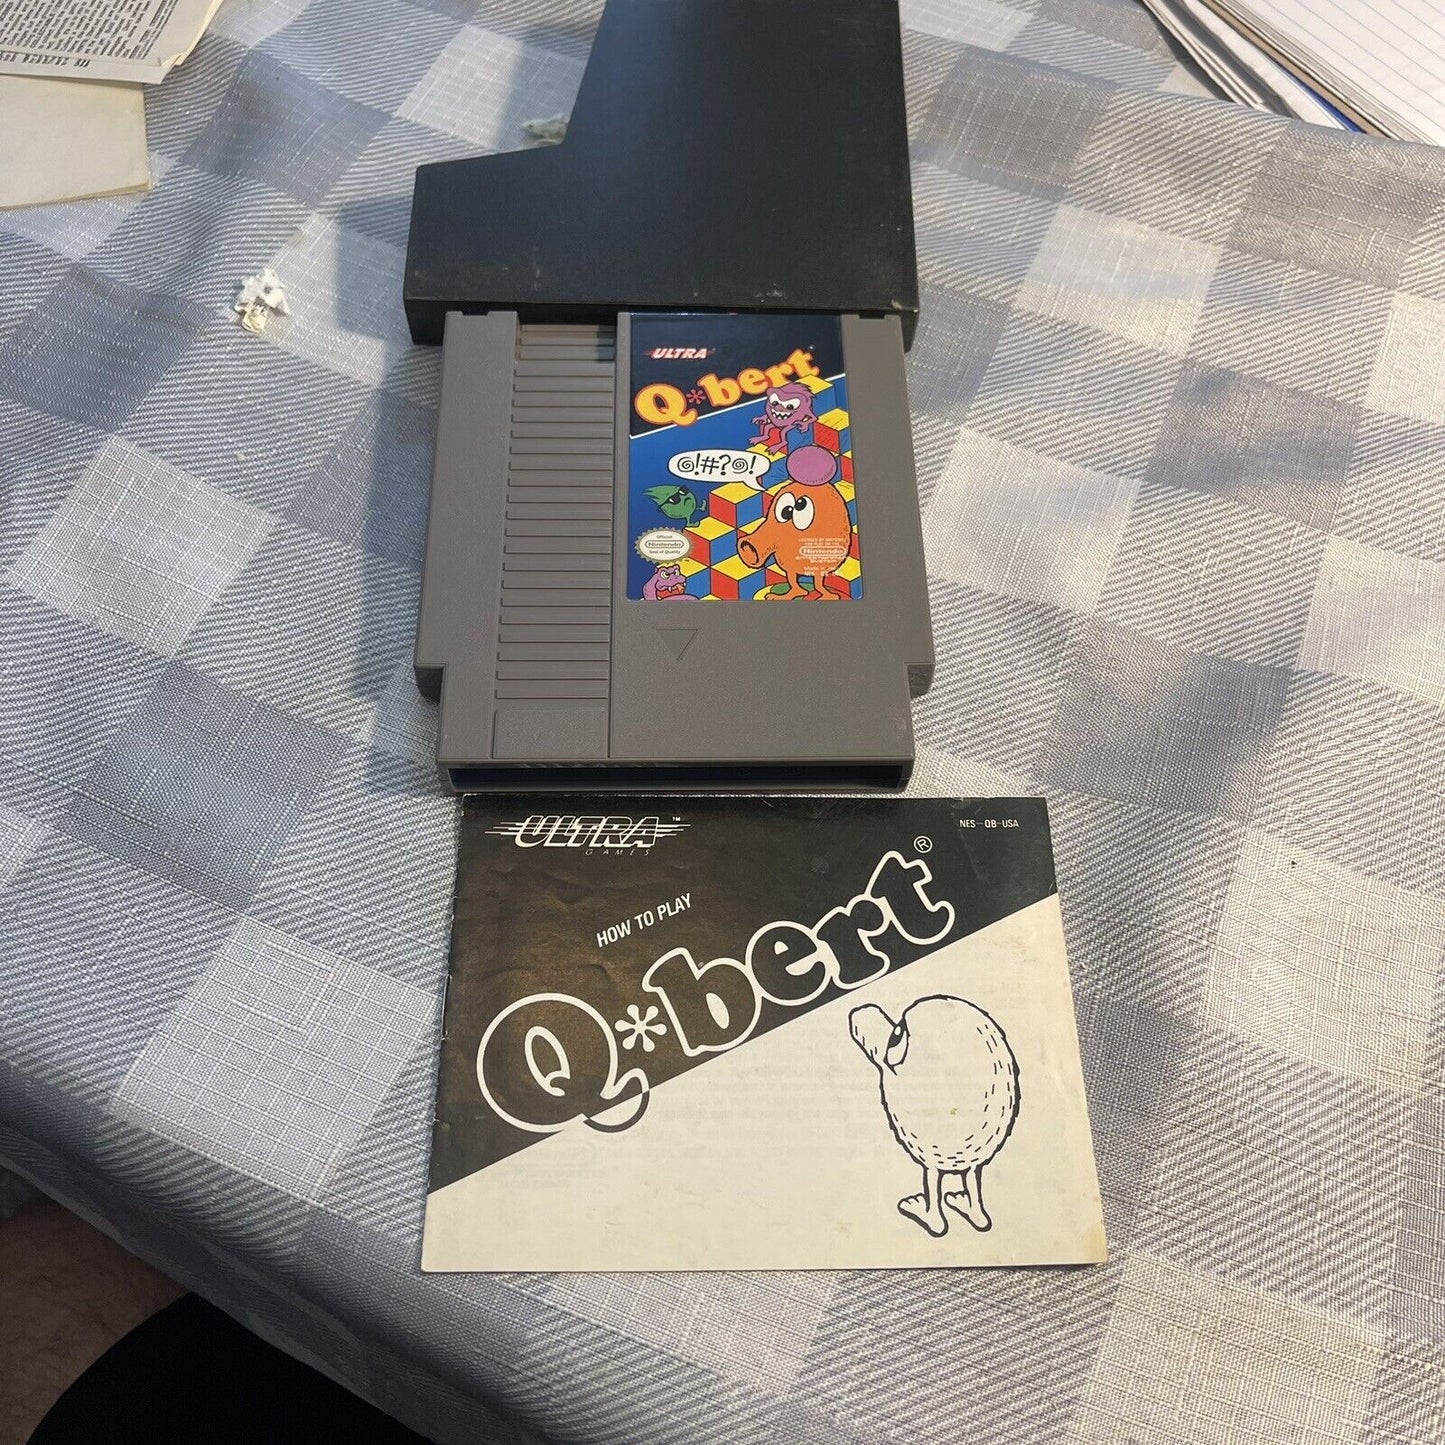 Q*bert (Nintendo Entertainment System, 1989) NES - QBERT